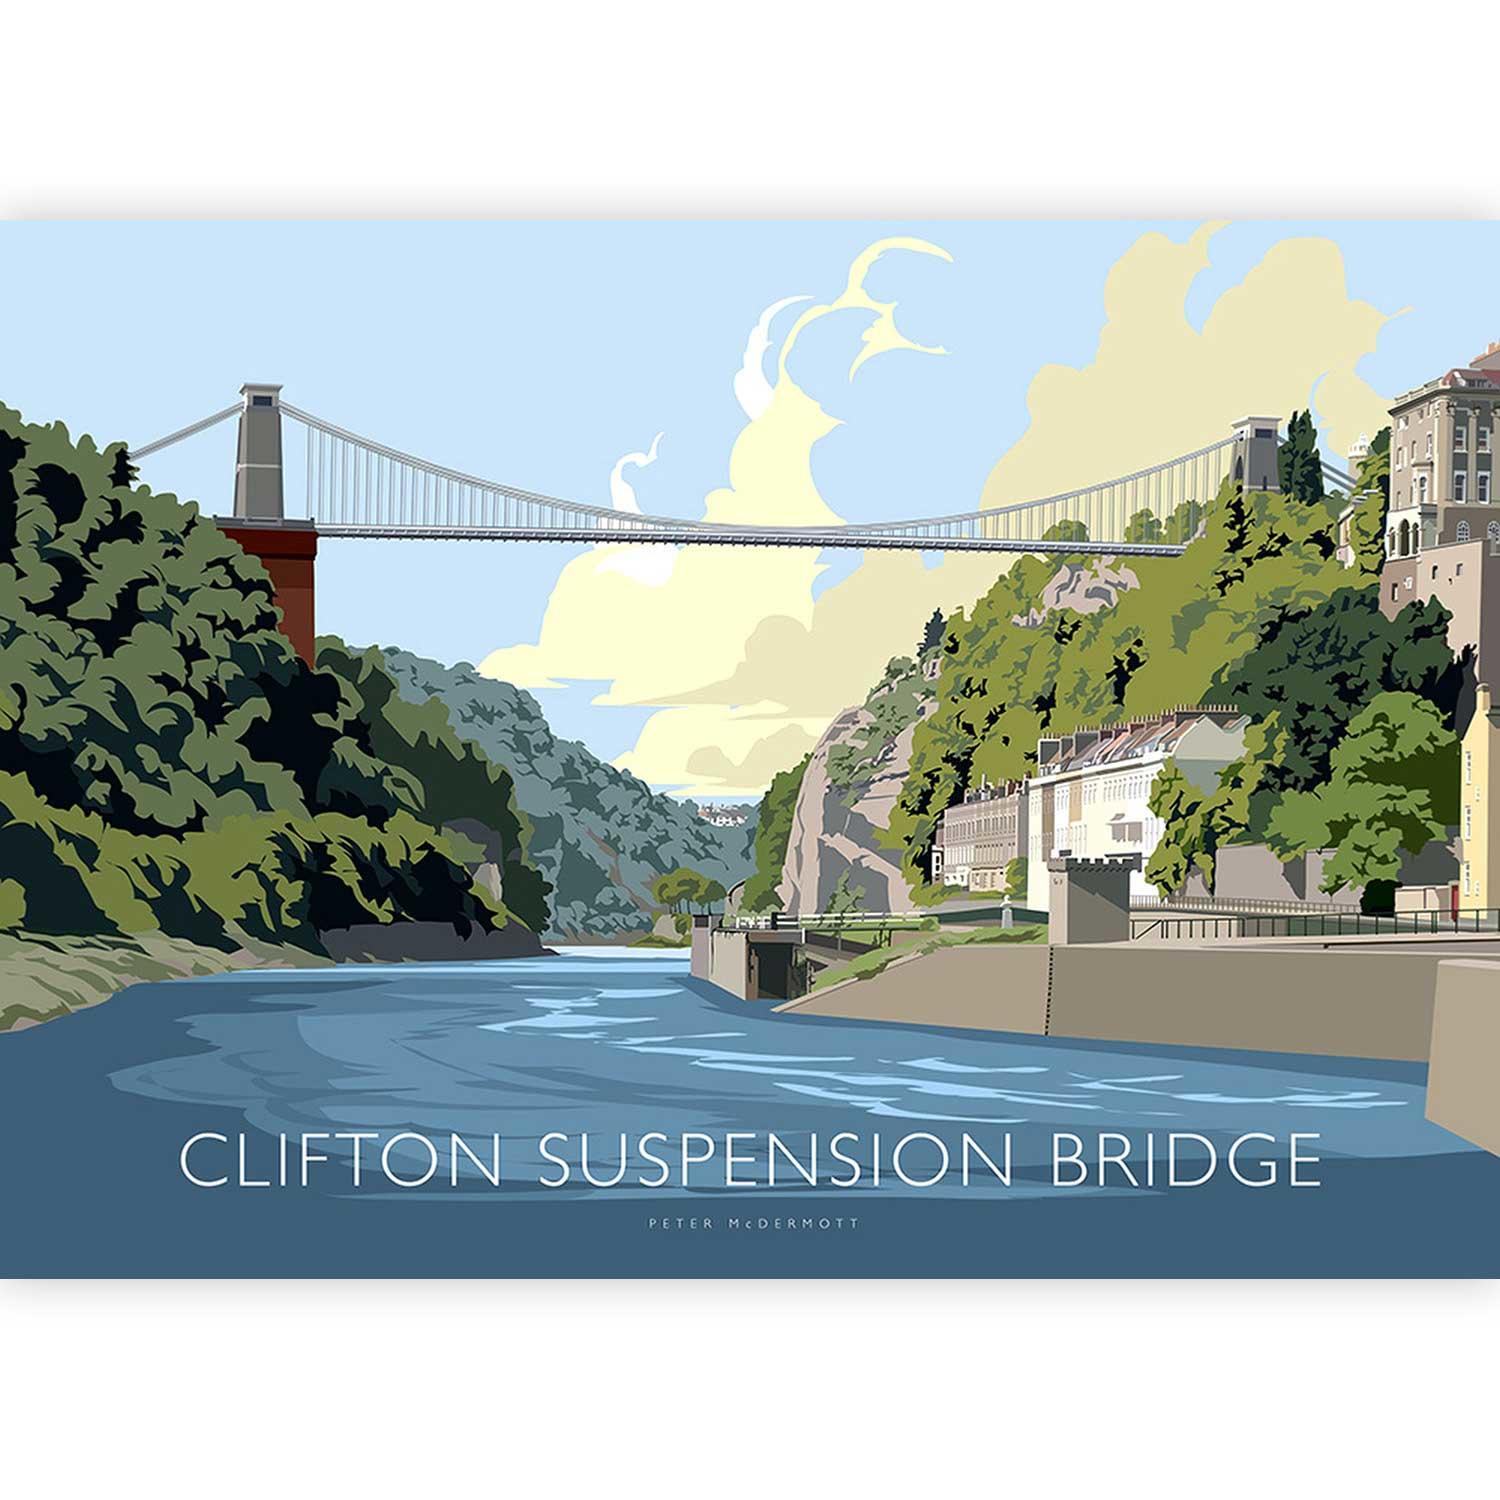 Clifton Suspension Bridge (Blue) by Peter McDermott